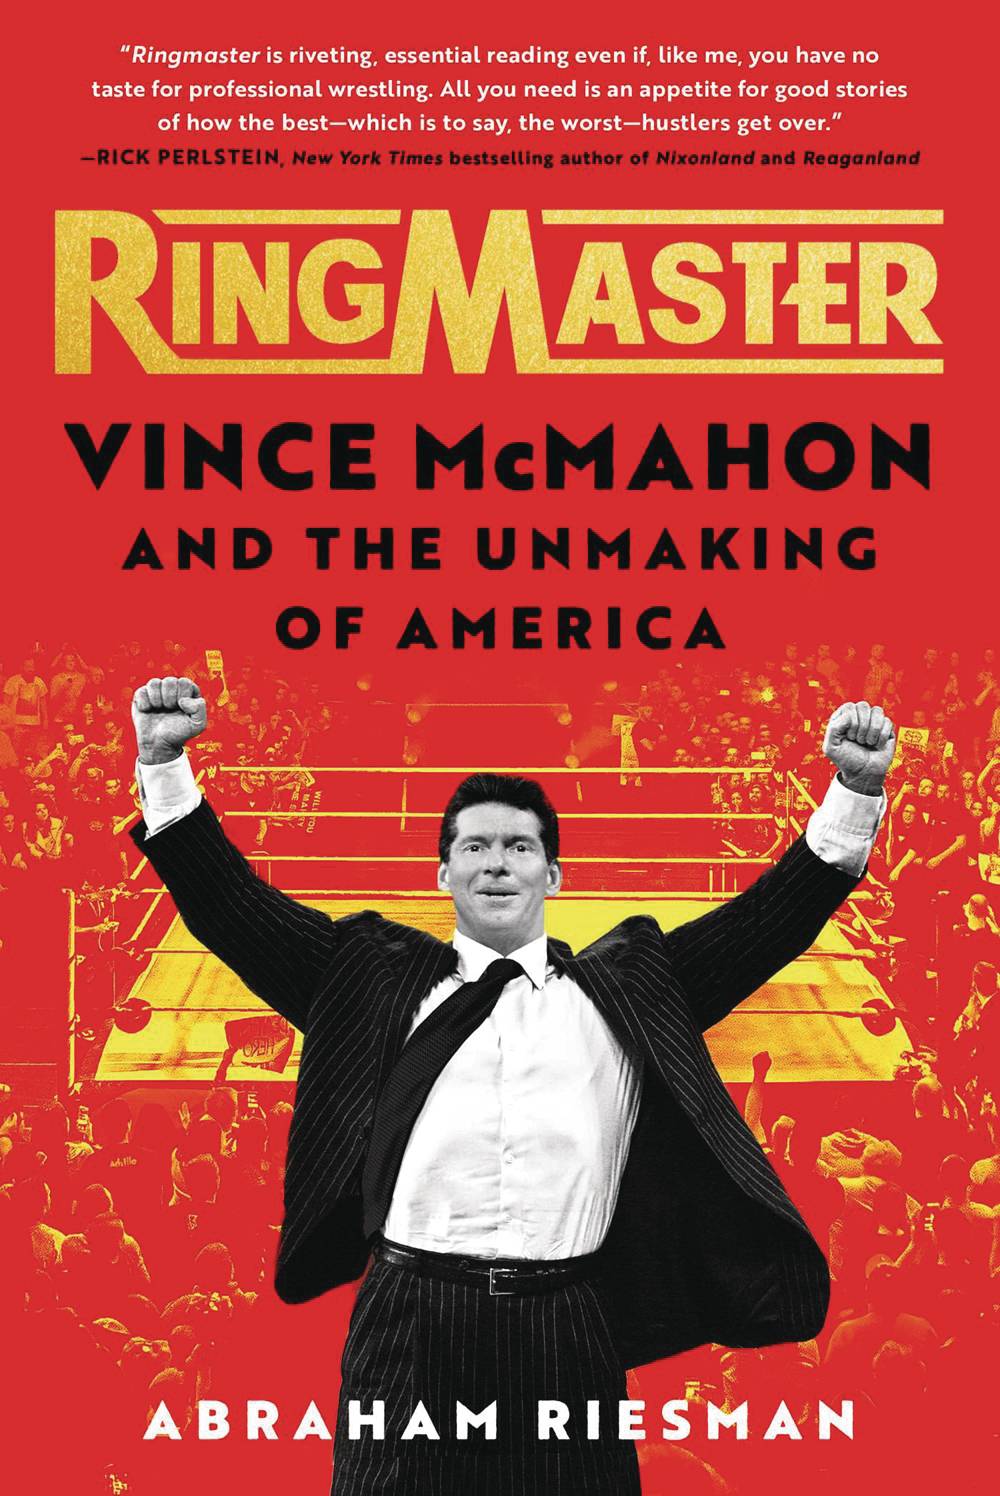 RINGMASTER VINCE MCMAHON & UNMAKING OF AMERICA